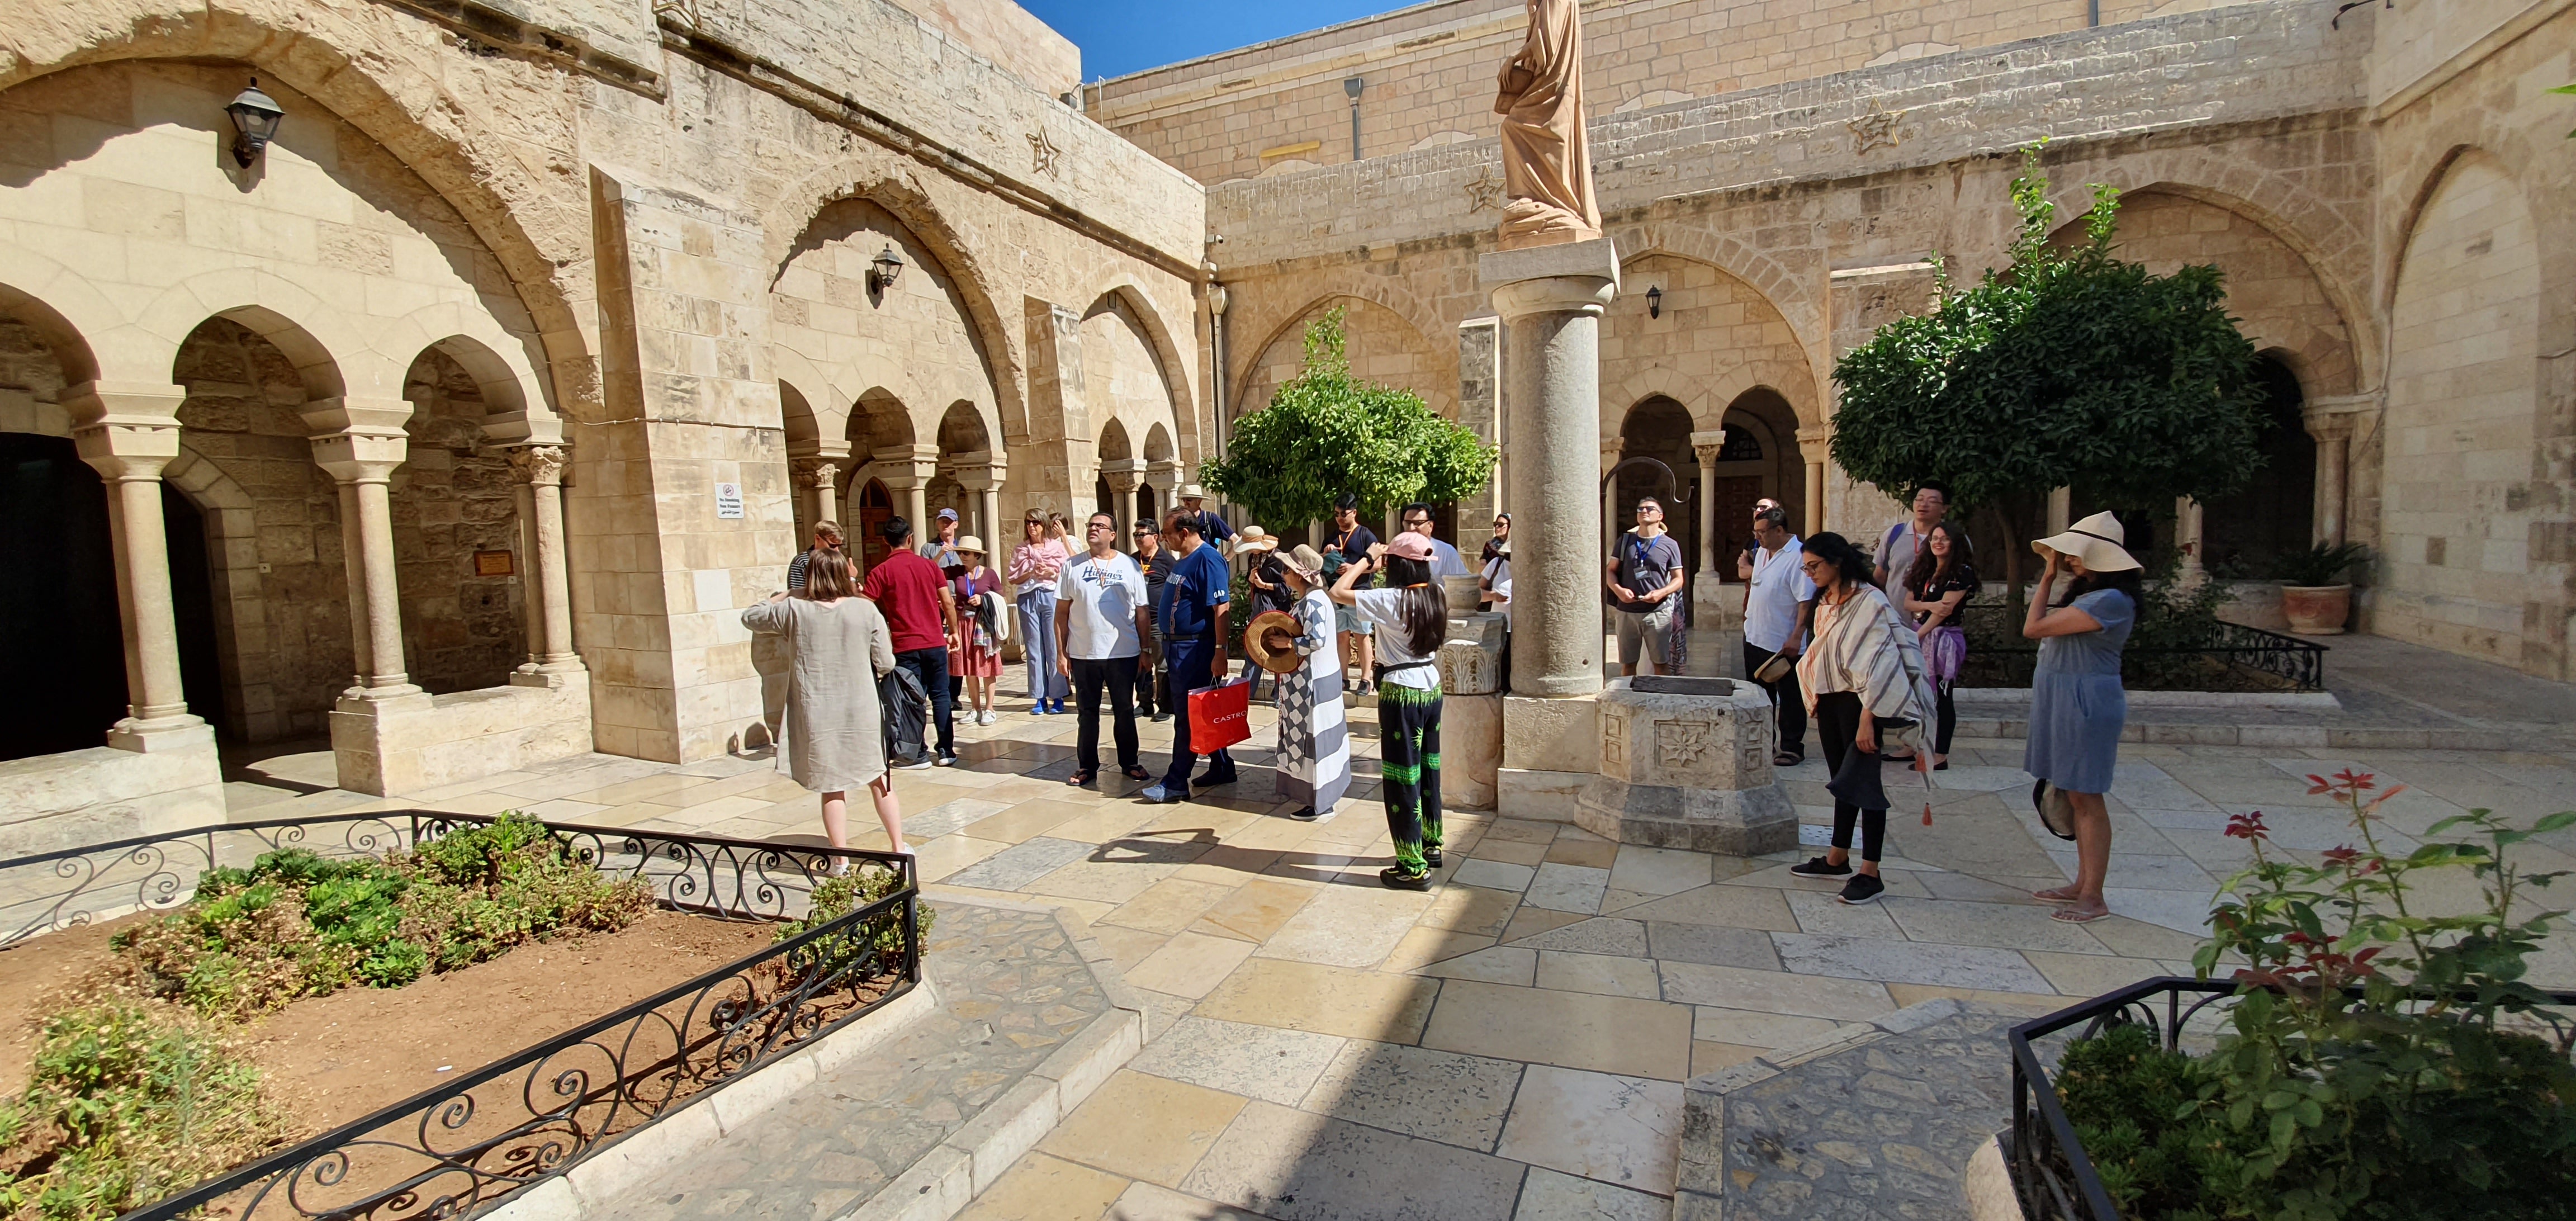 Nativity church Bethlehem Tour from Jerusalem - Saint Jerome guided visit